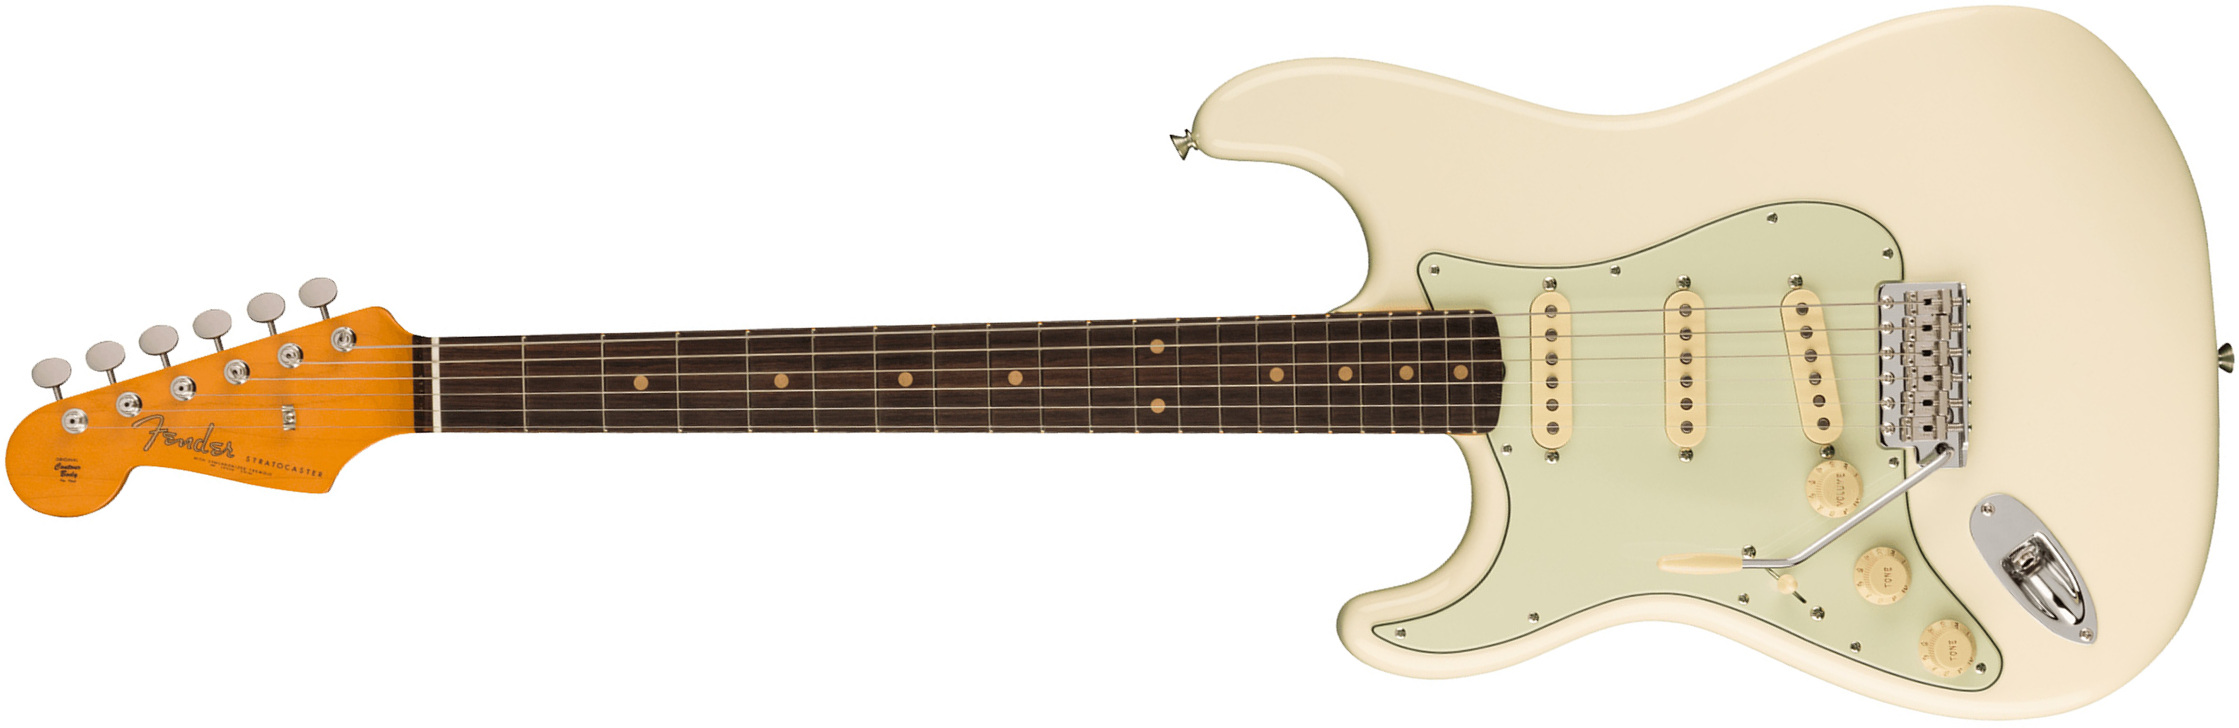 Fender Strat 1961 American Vintage Ii Lh Gaucher Usa 3s Trem Rw - Olympic White - Guitare Électrique Gaucher - Main picture